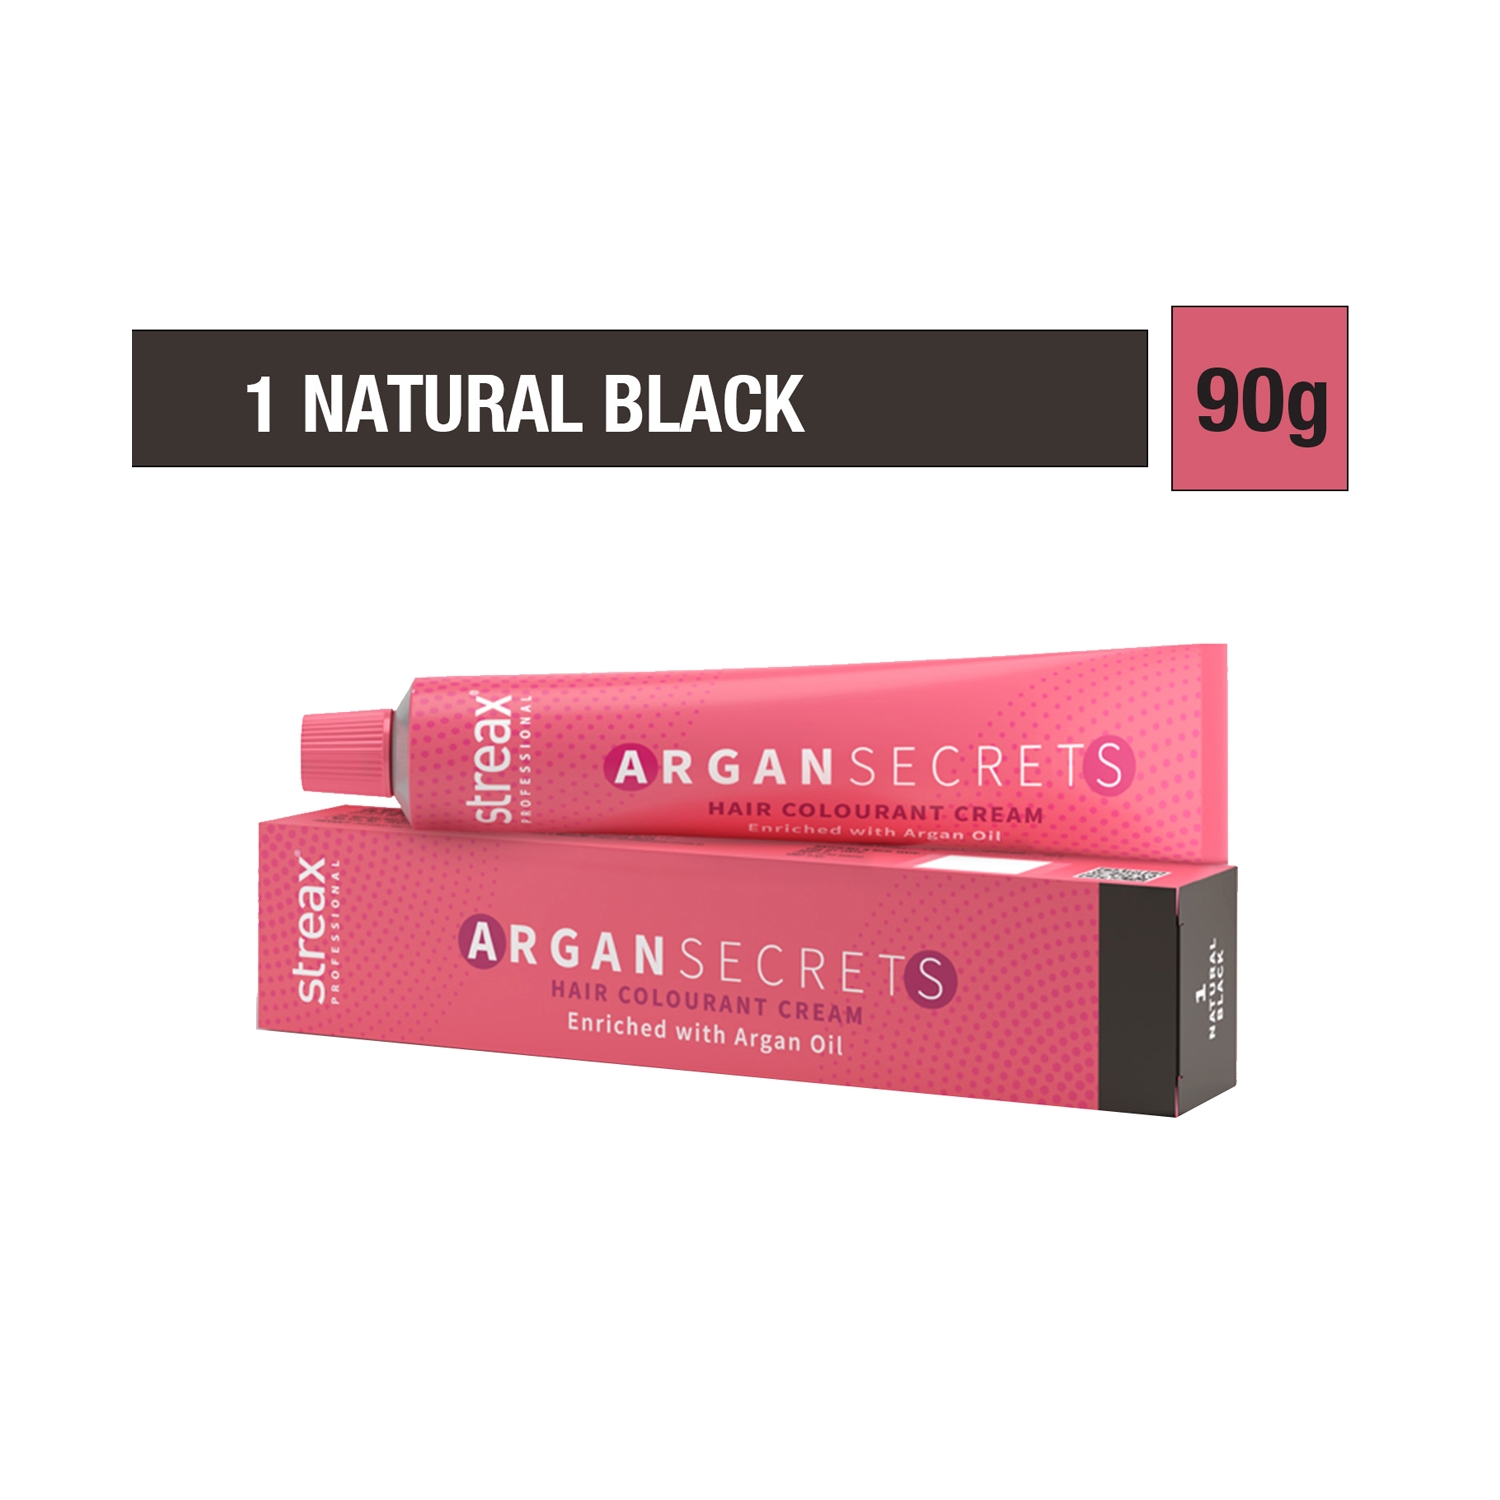 Streax Professional Argan Secrets Hair Colorant Cream - 1 Natural Black (90g)